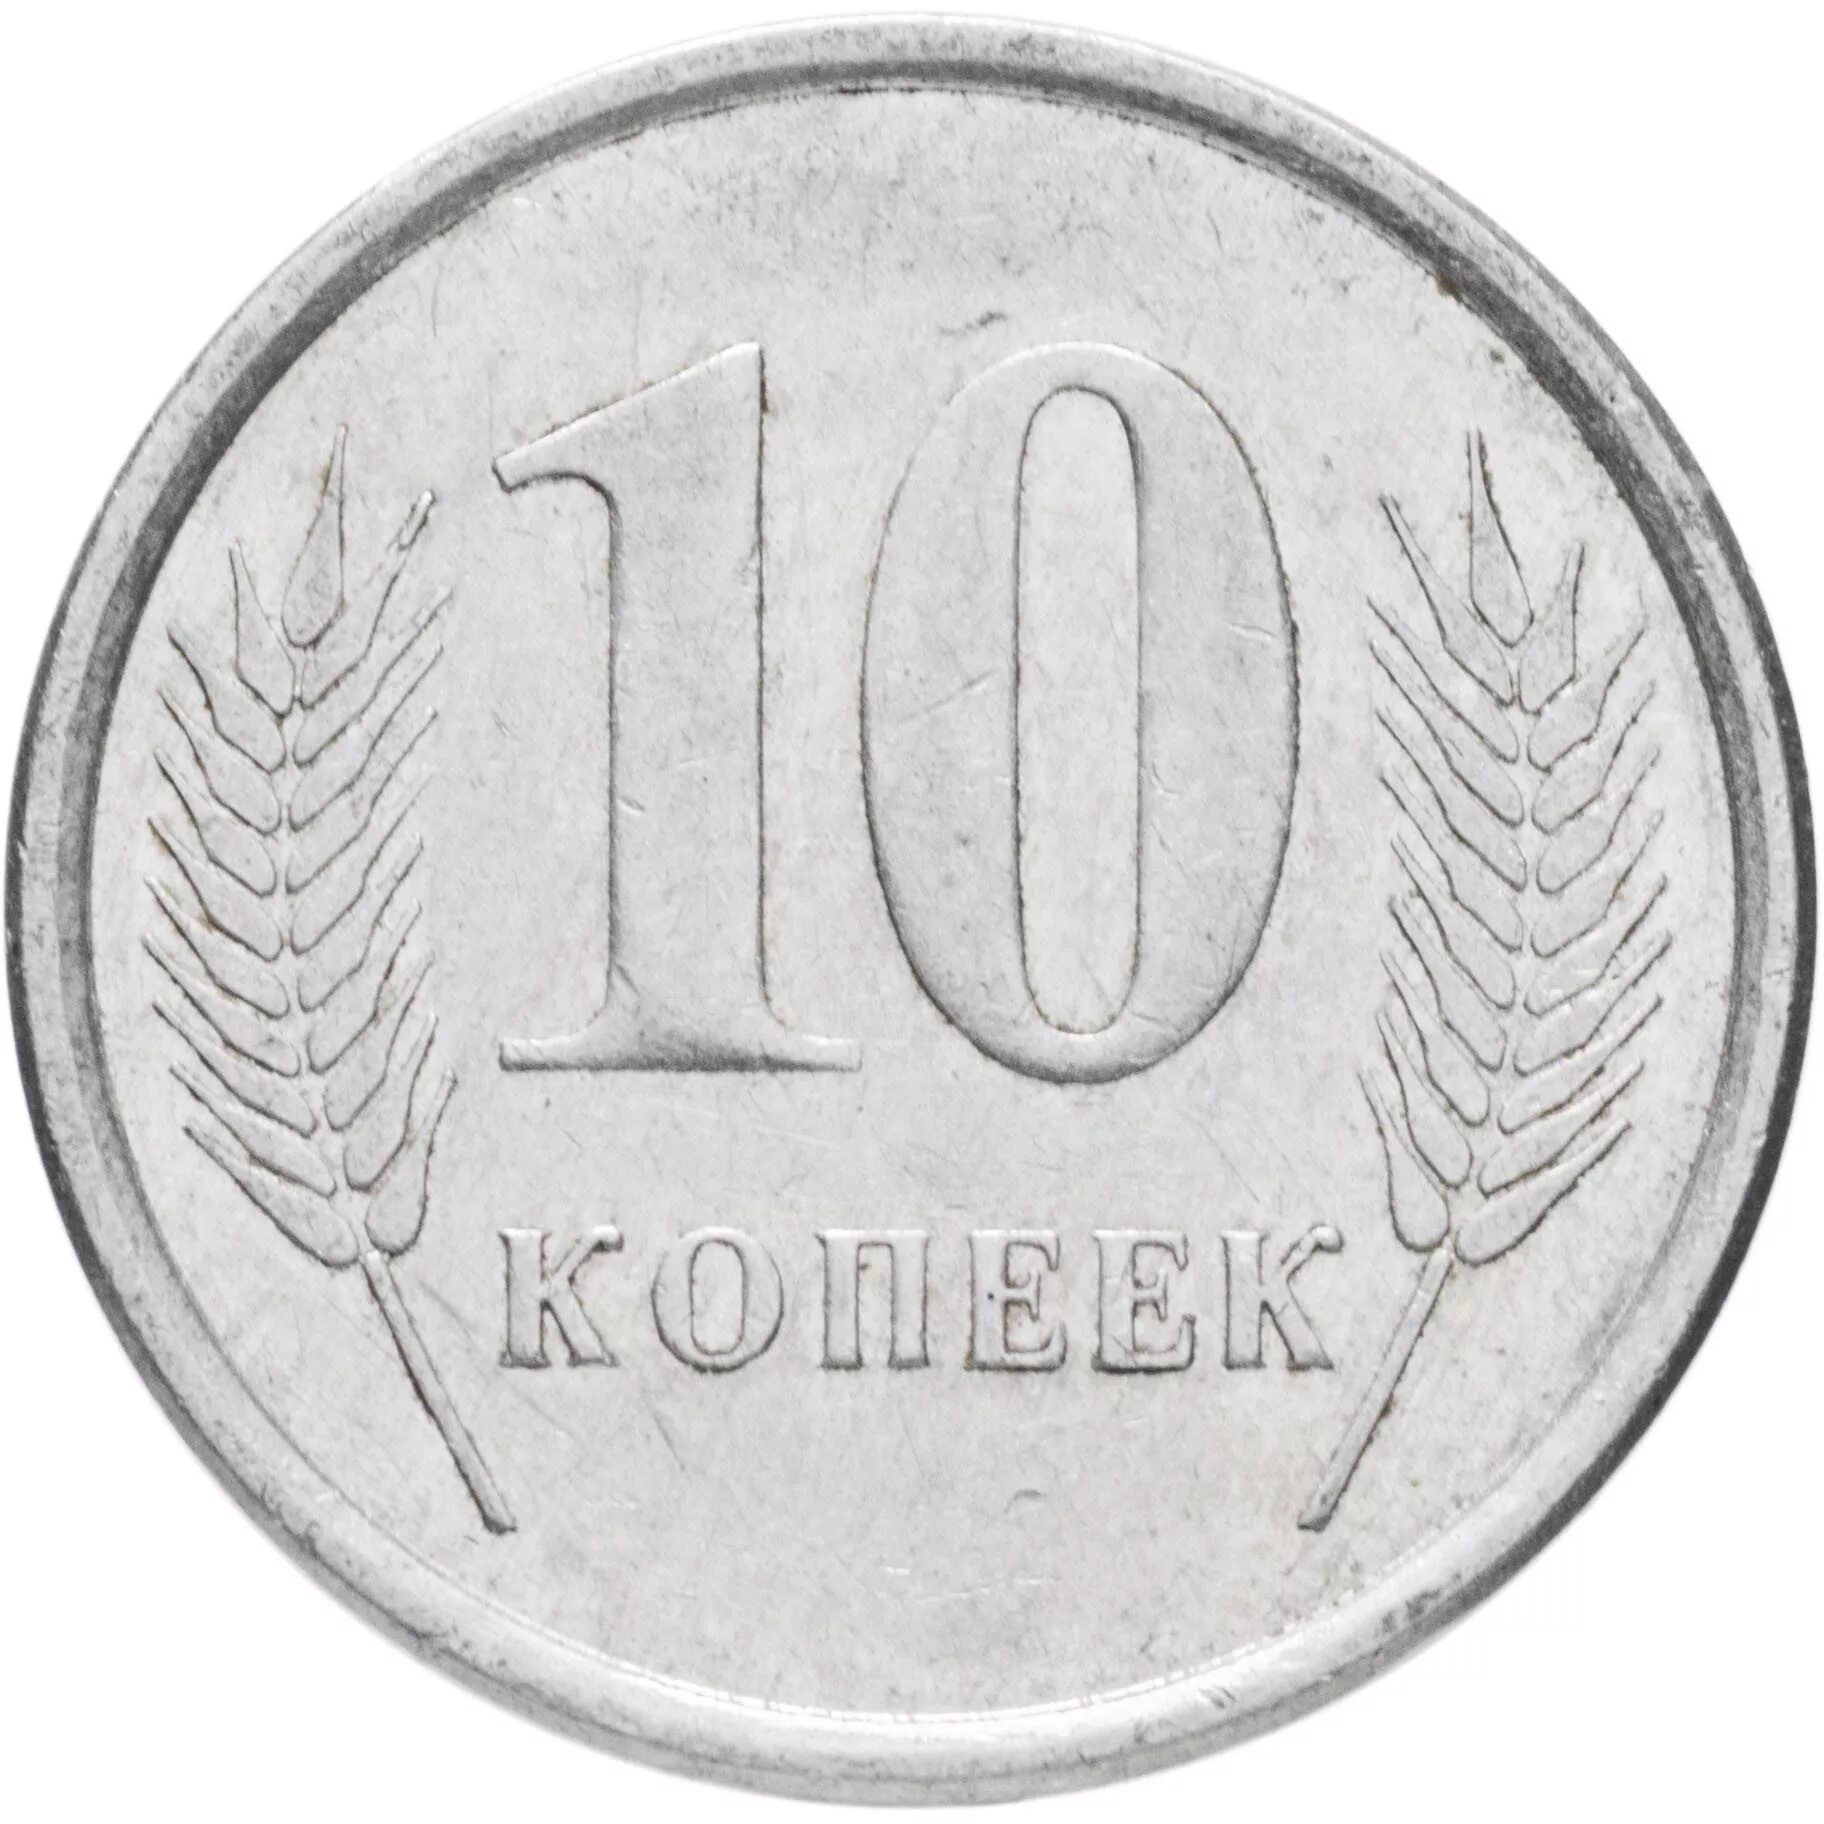 10 копеек 2000 года. 10 Копеек Приднестровье. Монета 10 копеек 2000. 1 Копейка ПМР. Монеты ПМР 10 коп 2020.